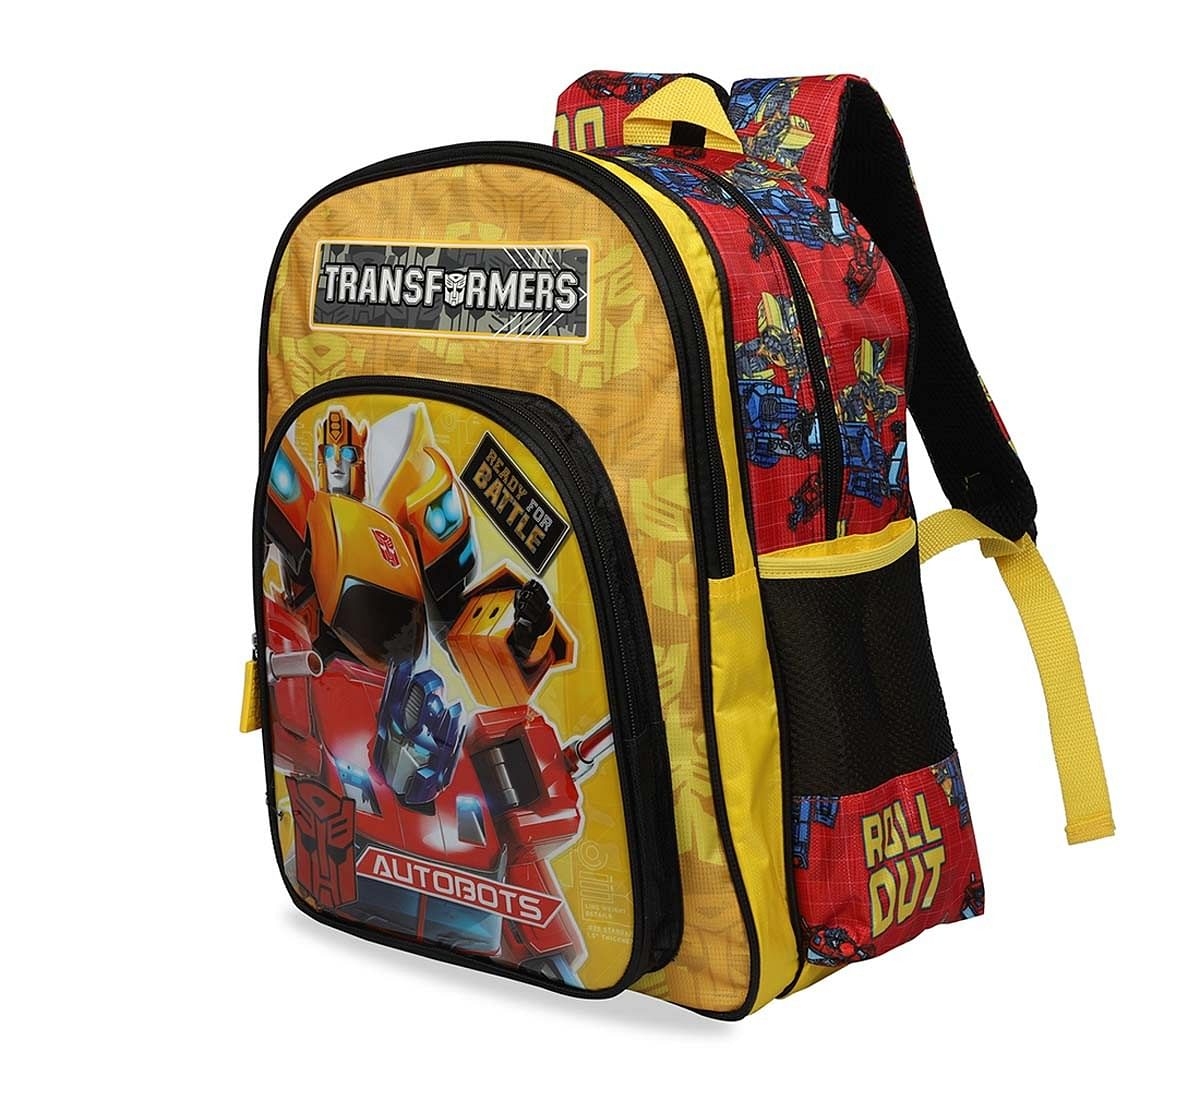 Excel Production Transformers Autobots School Bag 41 Cm Bags for Age 7Y+